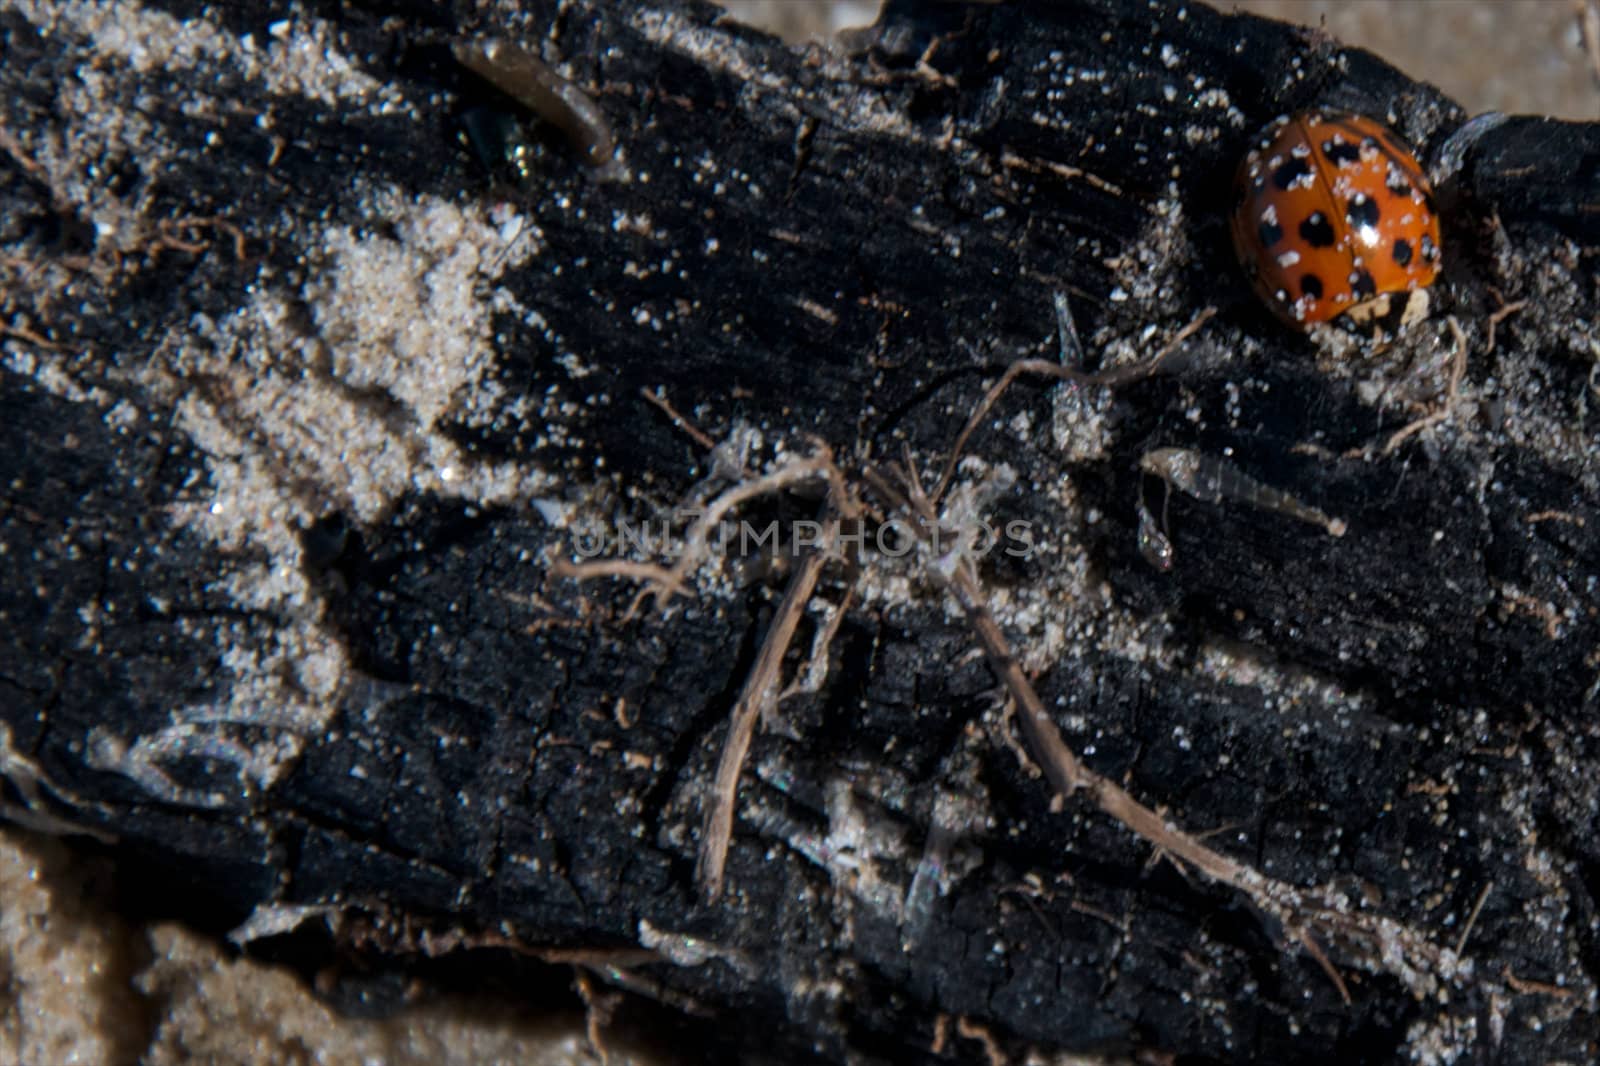 Ladybug on firewood by tyroneburkemedia@gmail.com